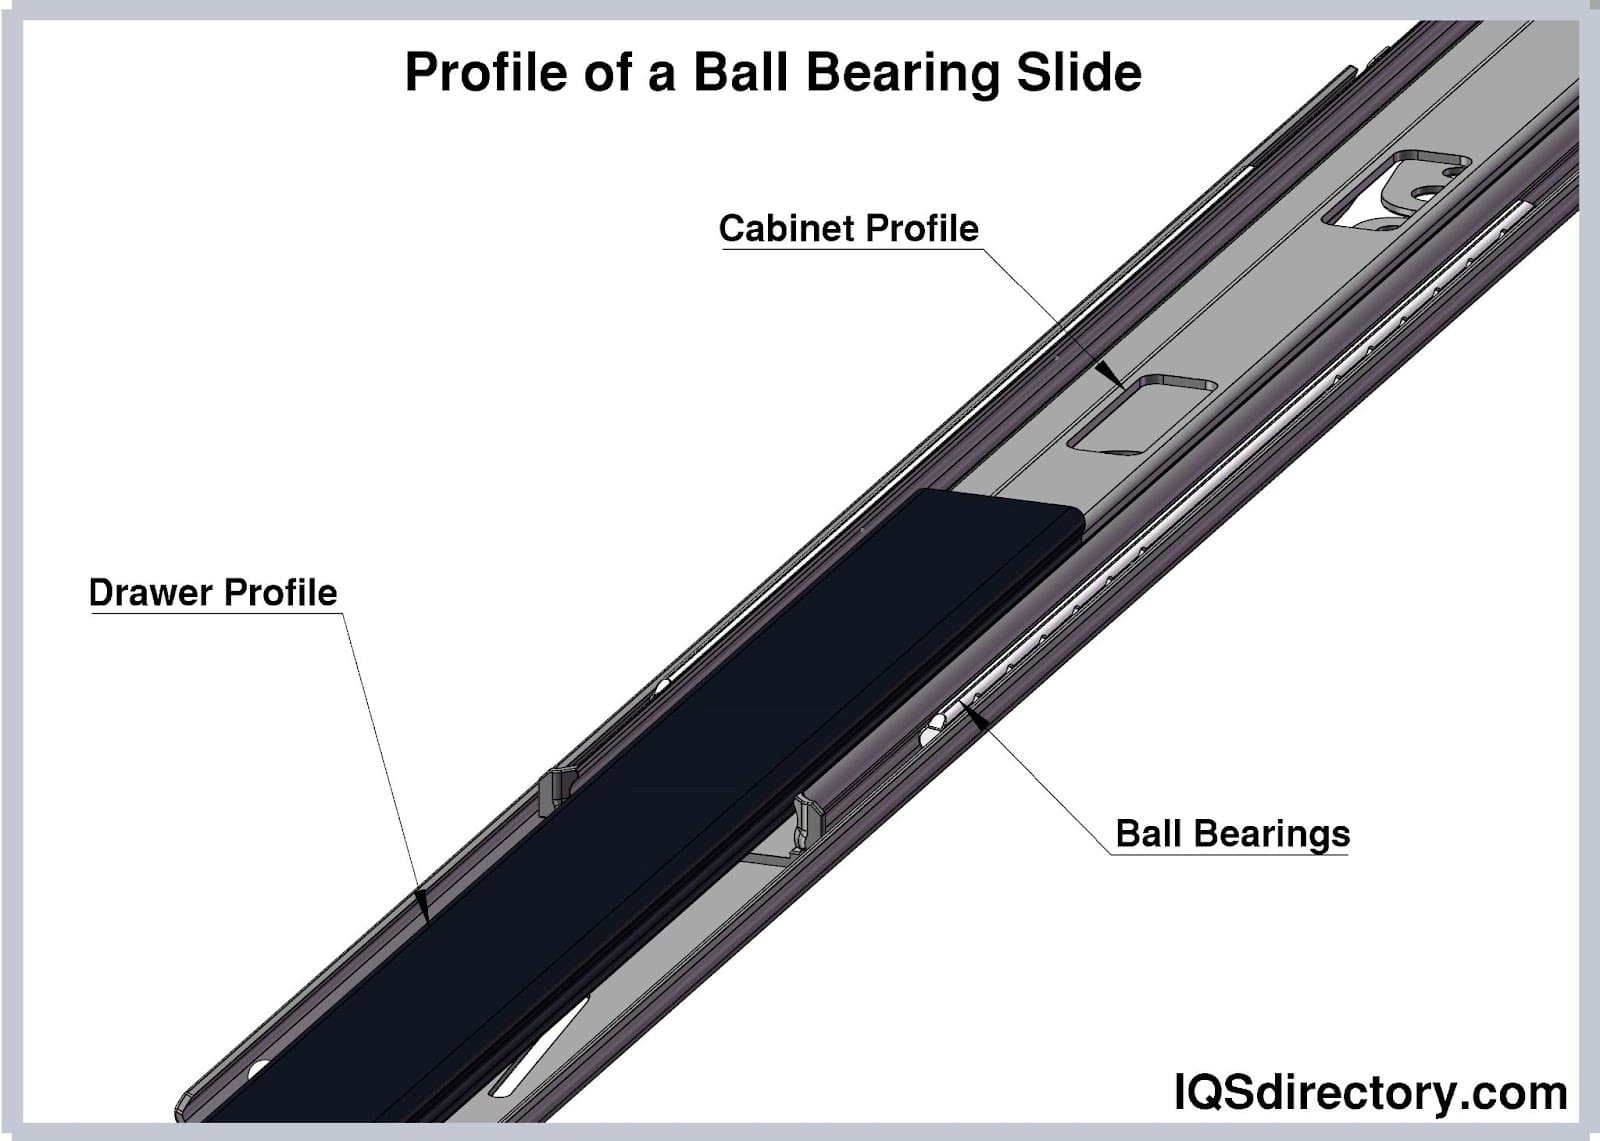 Profile of a Ball Bearing Slide